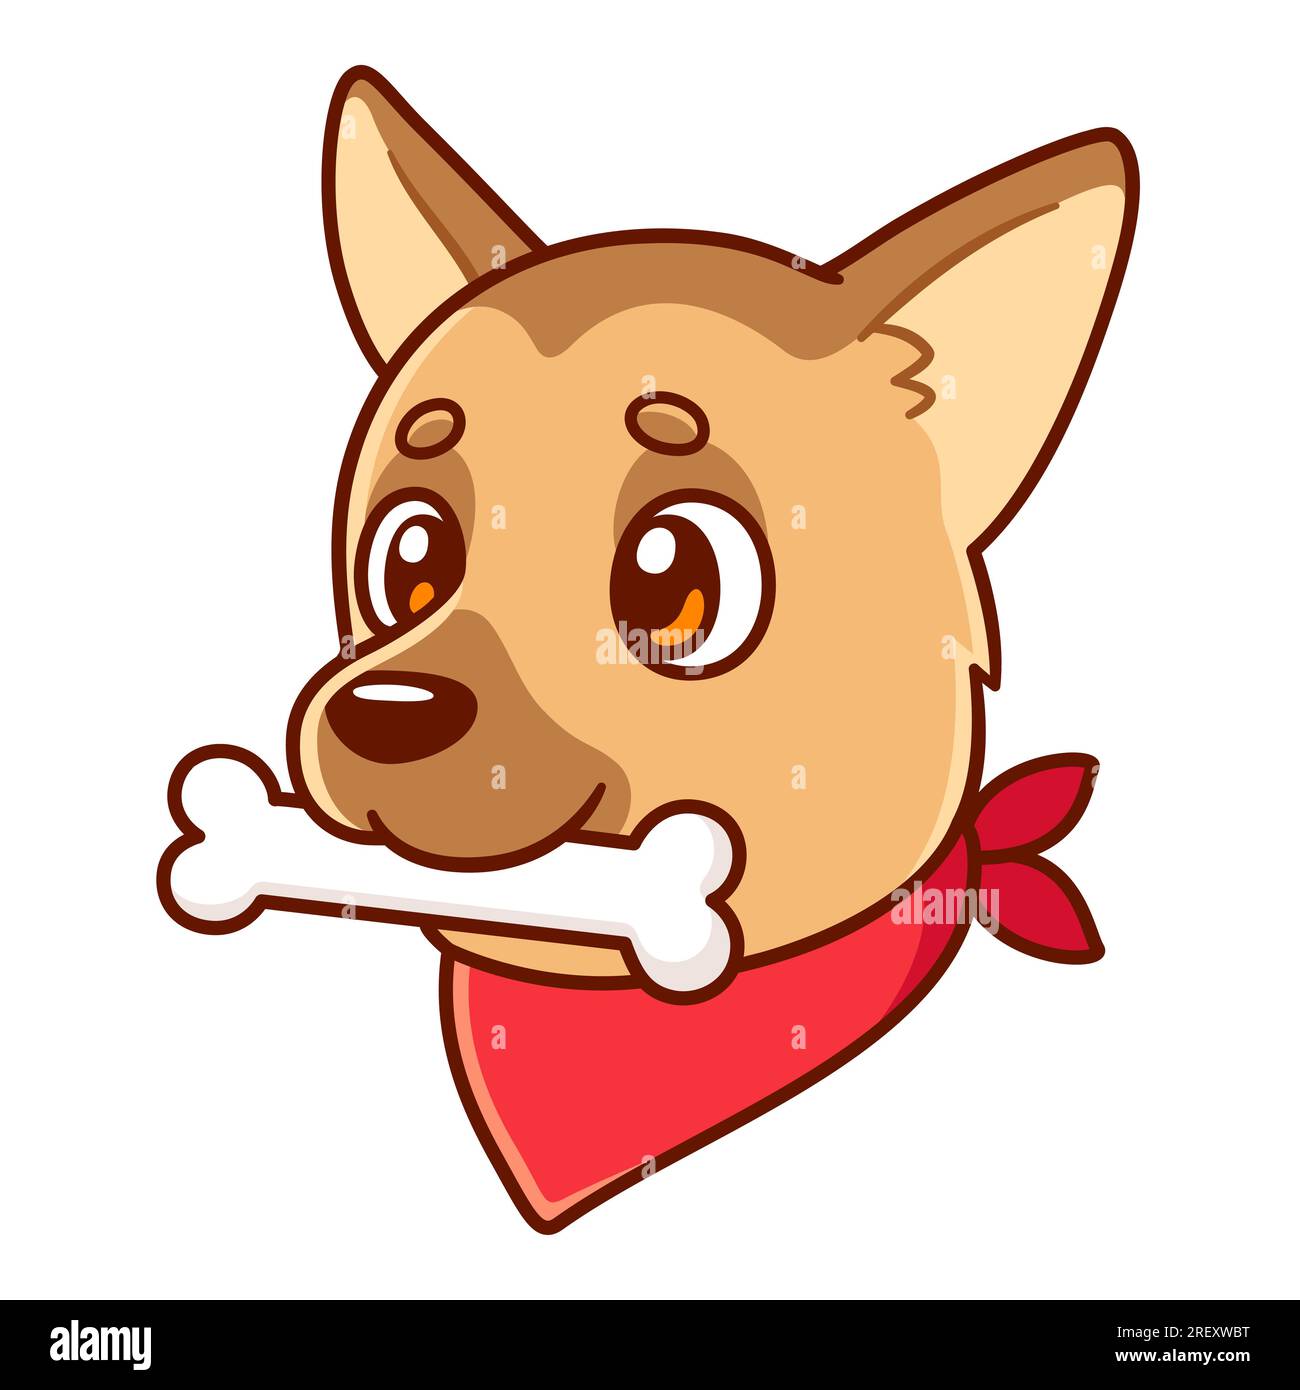 Funny cartoon dog portrait drawing with bone and red bandana. Cute German shepherd vector illustration. Stock Vector